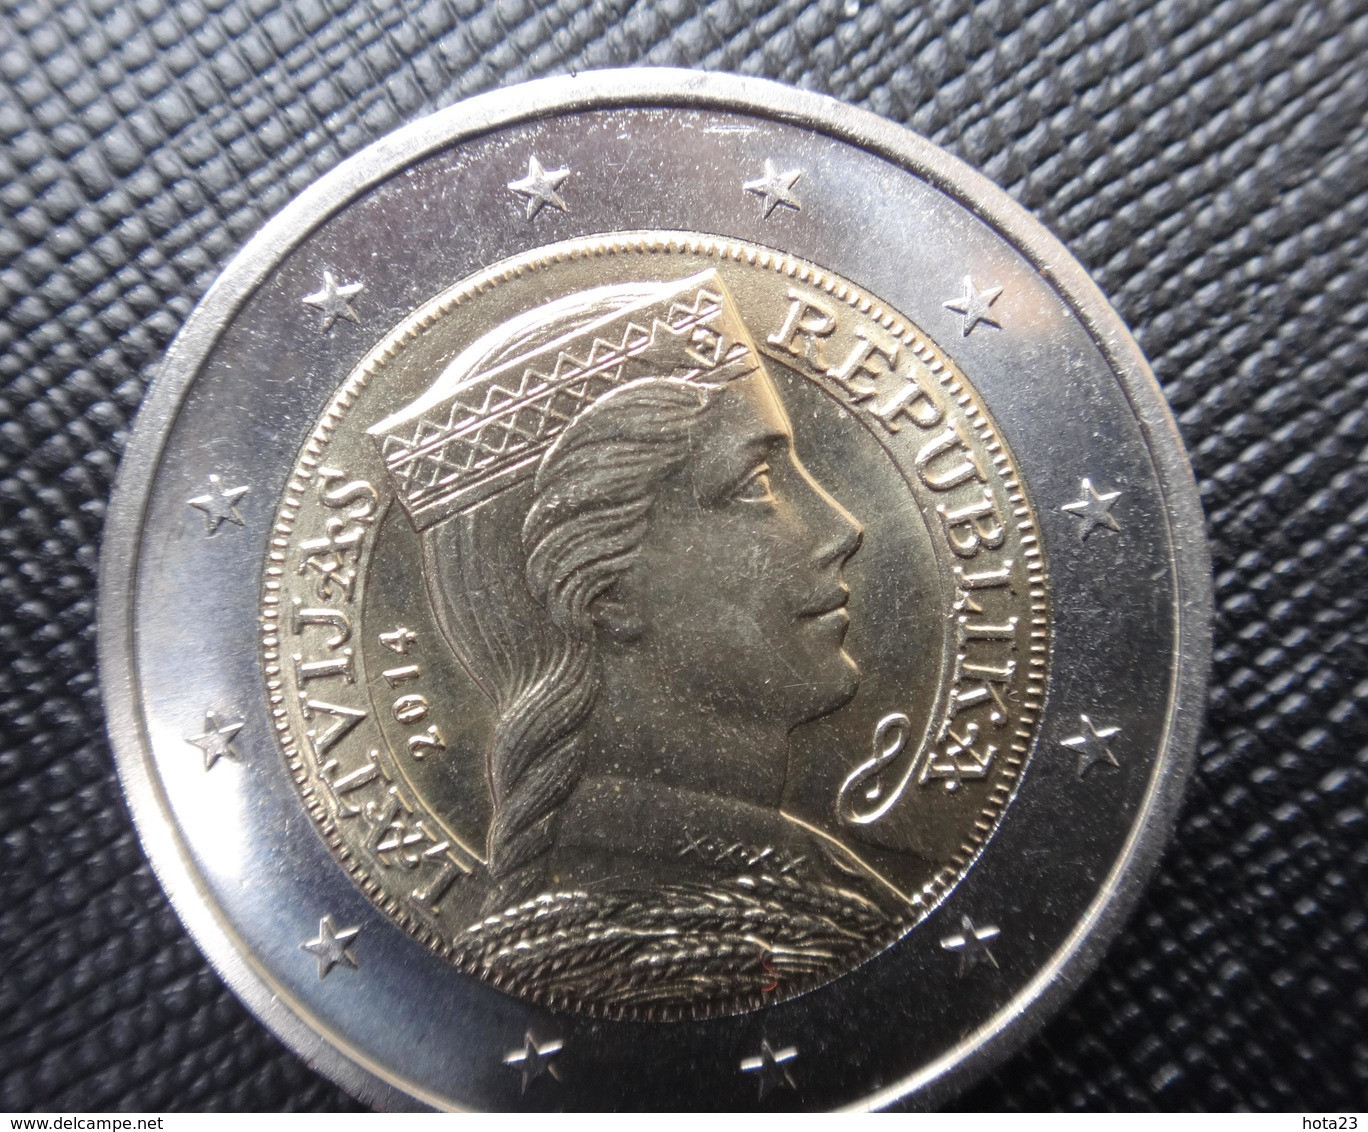 LETTLAND 2 EURO Kursmünze MÜNZEN 2014 Jahre LATVIA COIN  CIRCULATED - Letonia